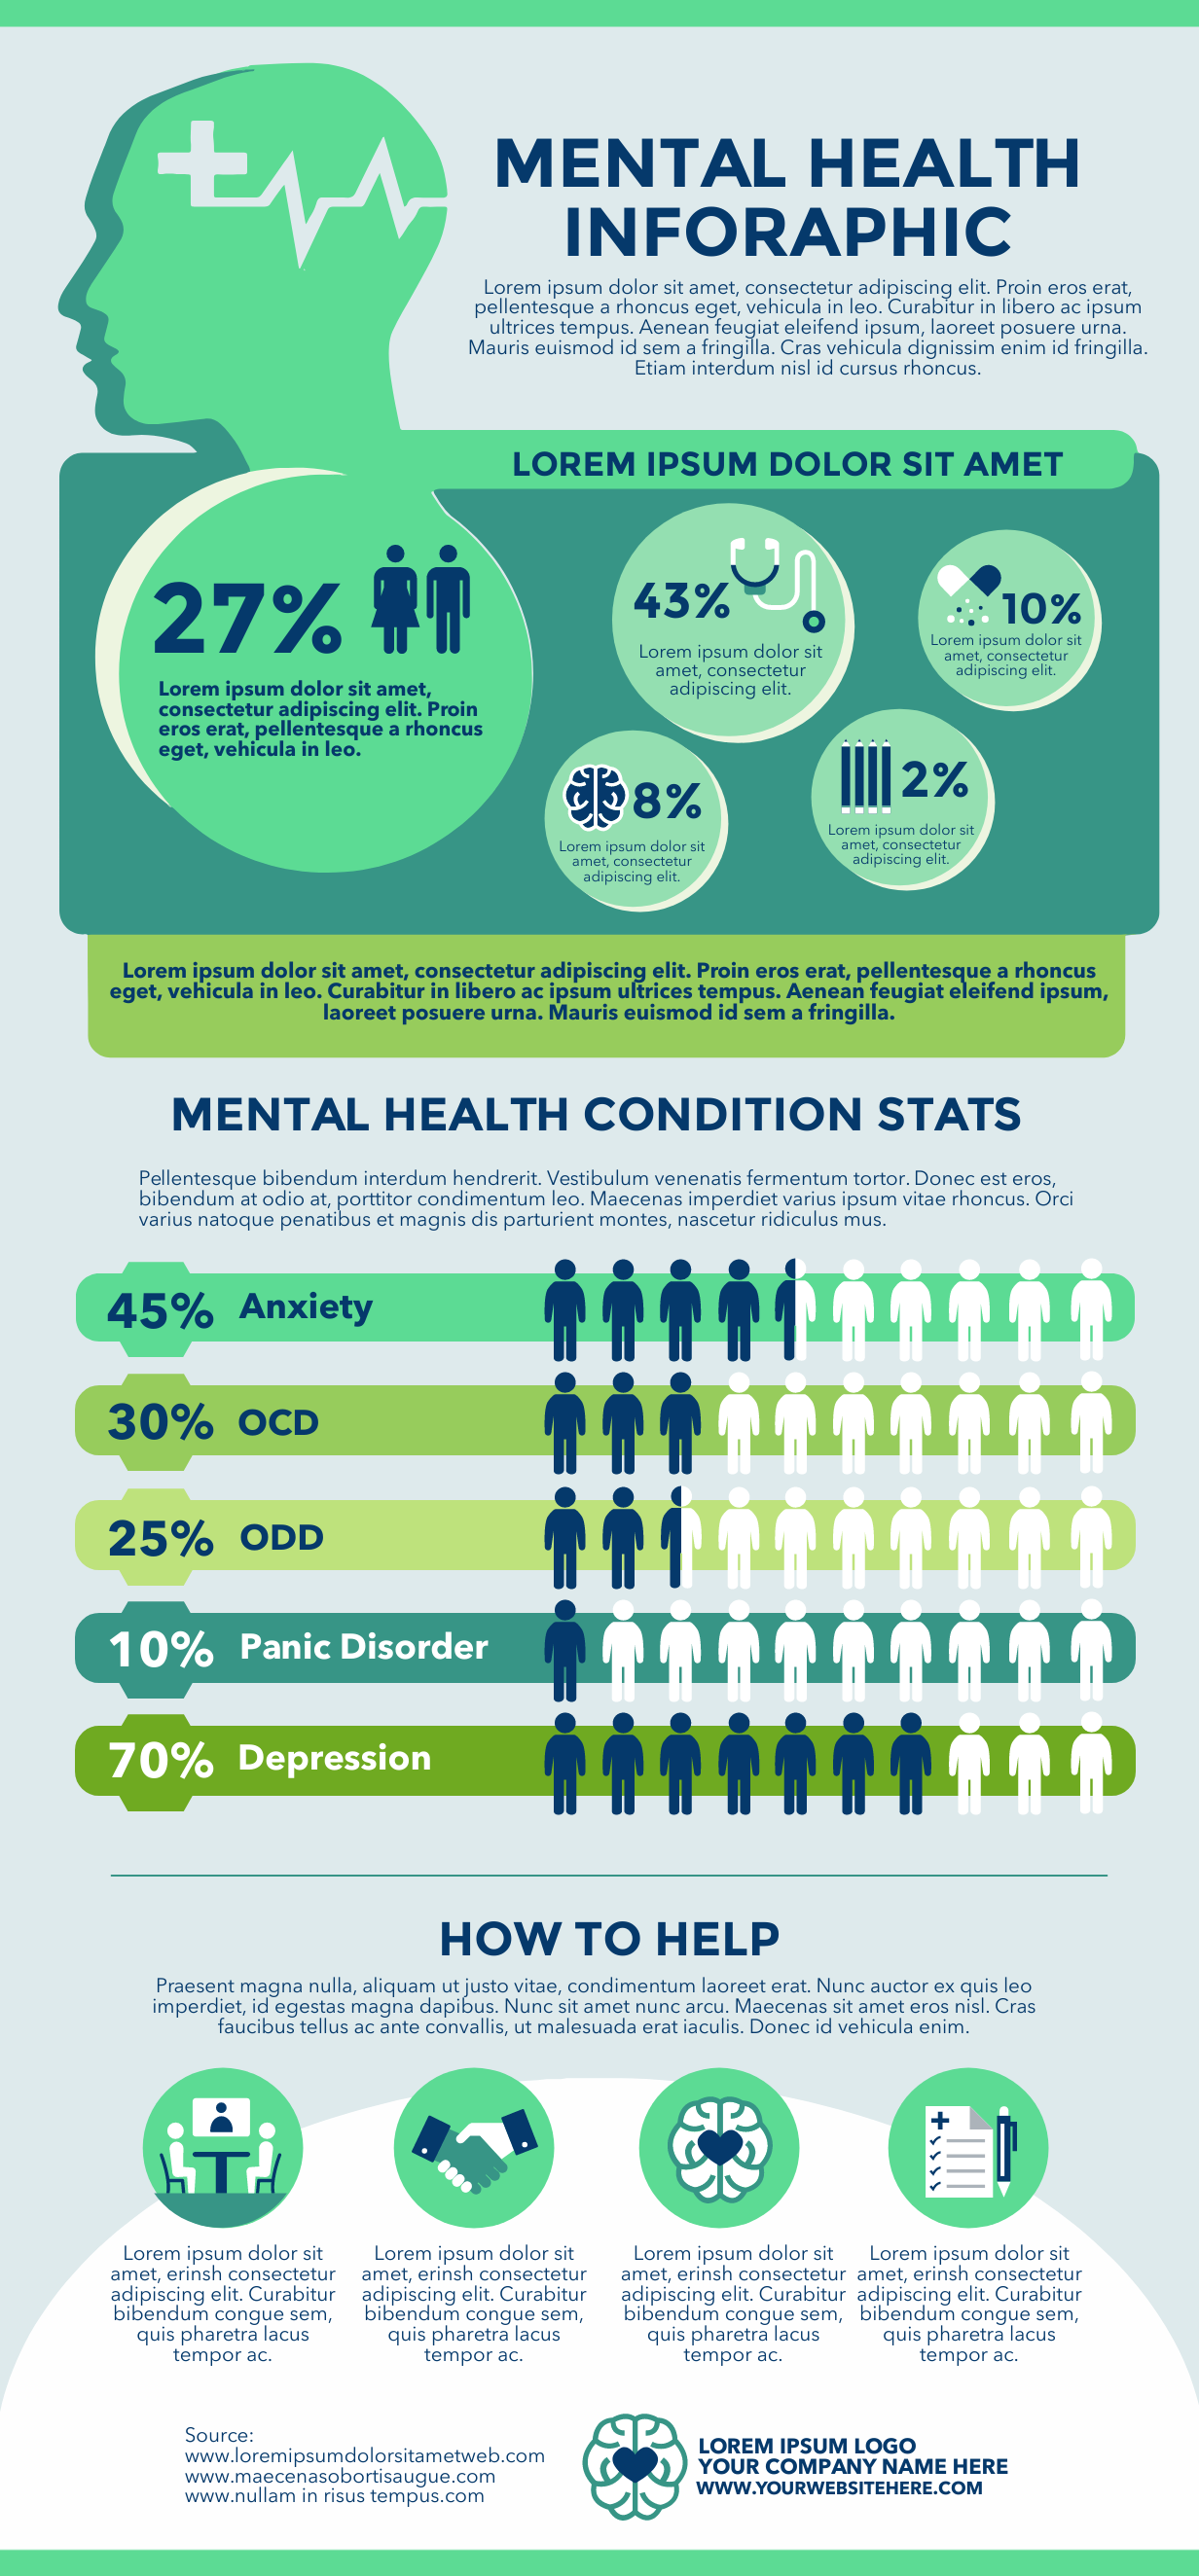 menta health infographic